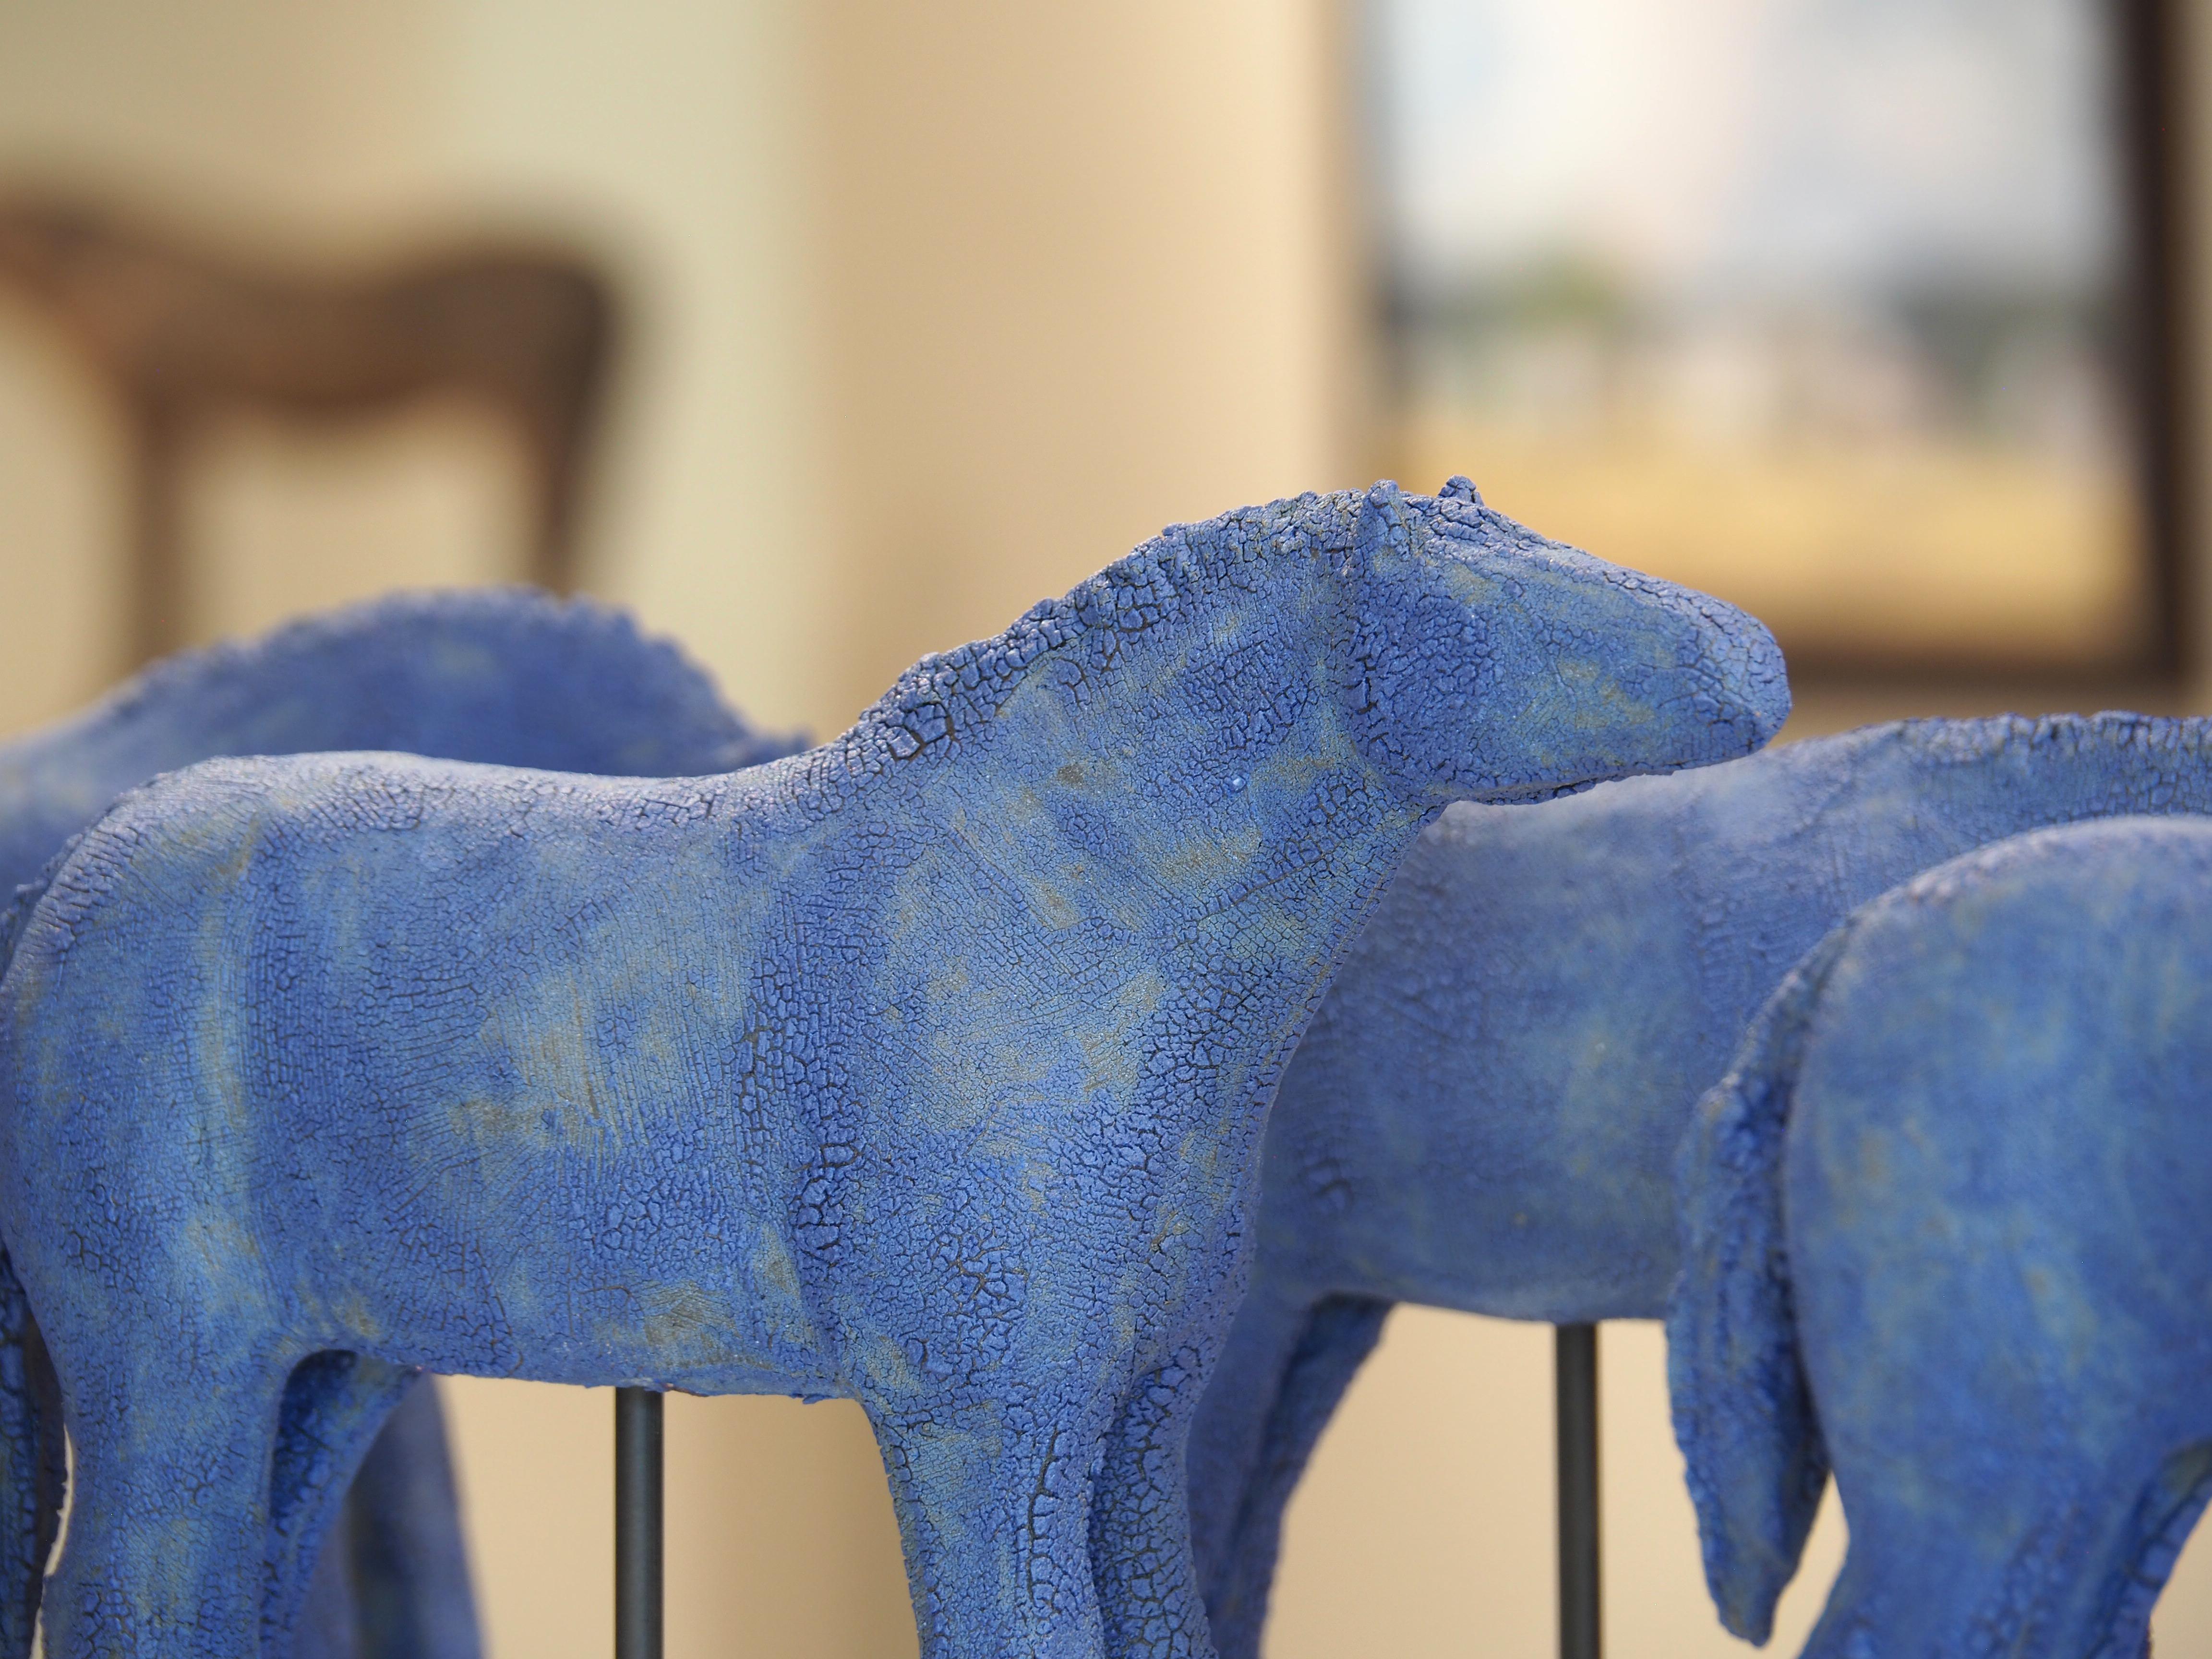 Blue Mud Herd (set of 6) (ceramic, sculpture, horses, crackle glaze, color) - Gray Figurative Sculpture by Amy Laugesen